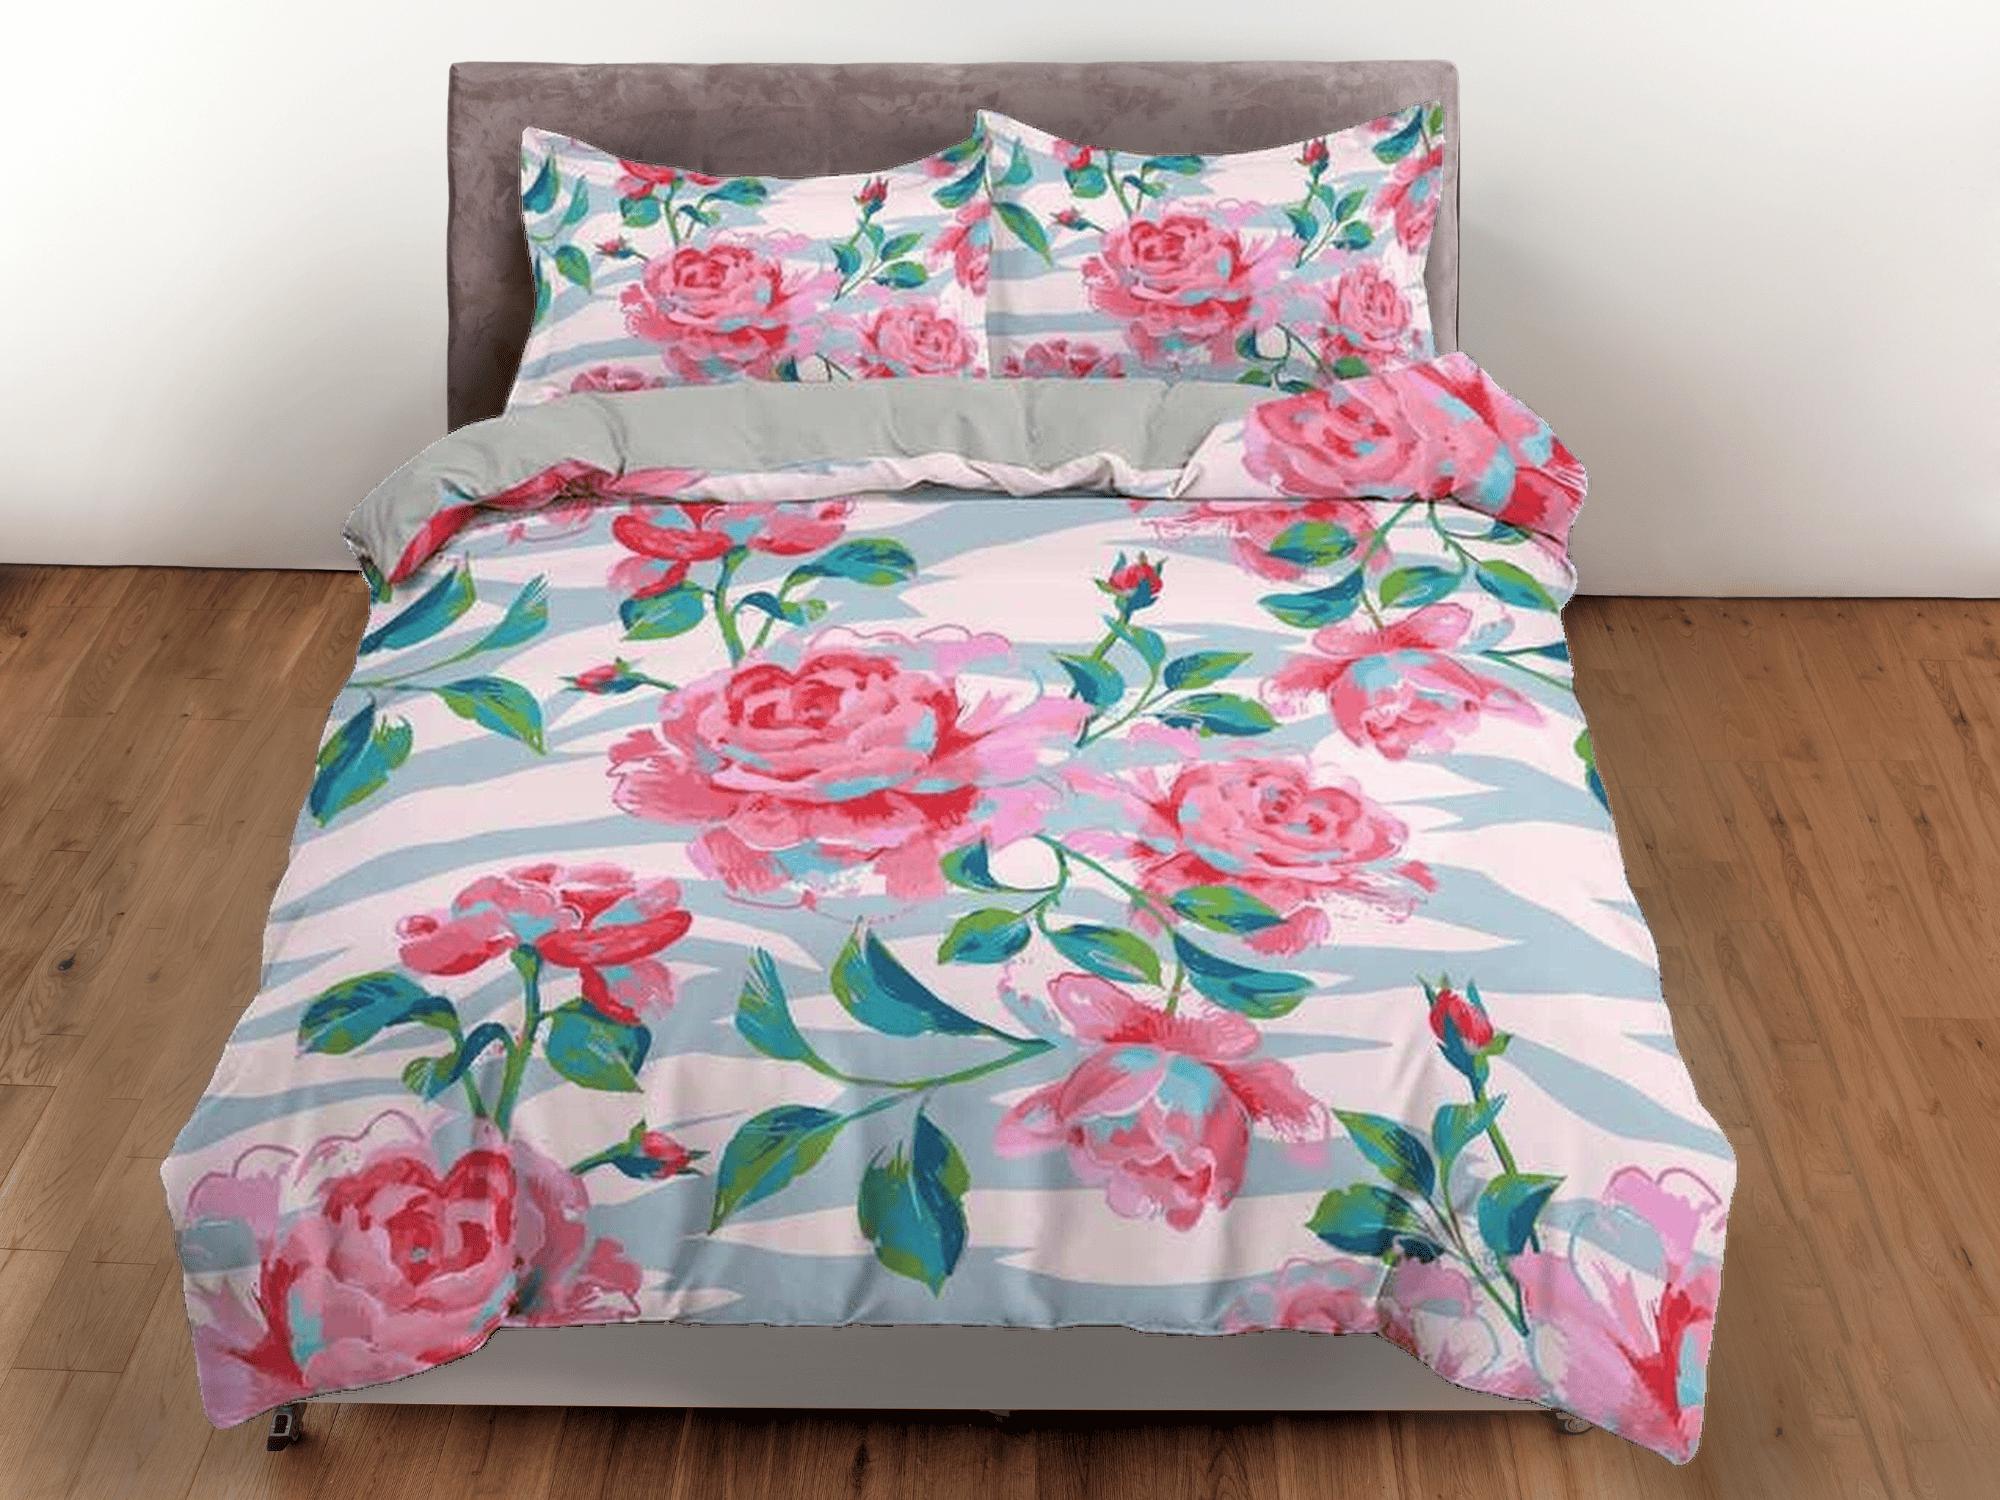 daintyduvet Pink carnation floral duvet cover colorful bedding, teen girl bedroom, baby girl crib bedding boho maximalist bedspread aesthetic bedding